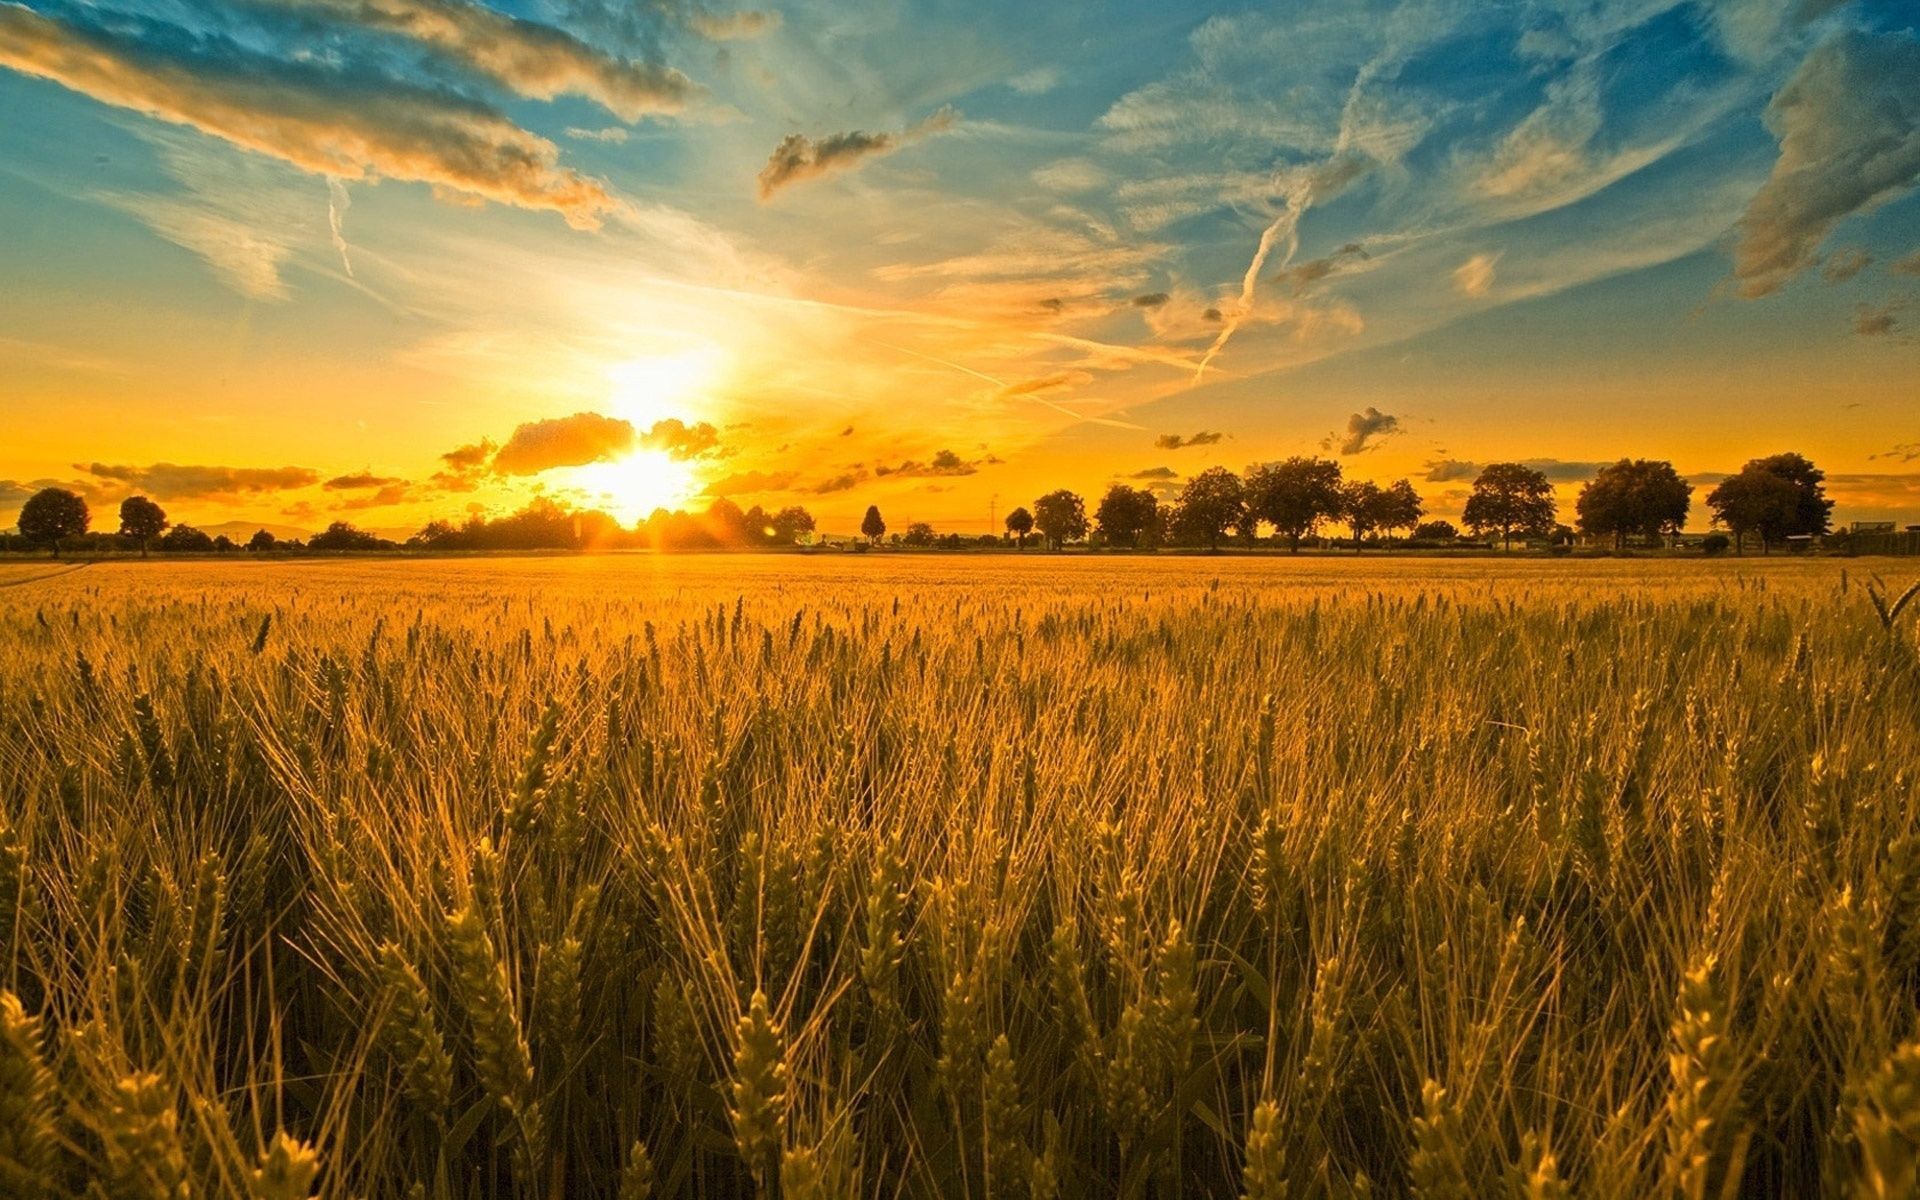 The sun rising over a field of wheat - Farm